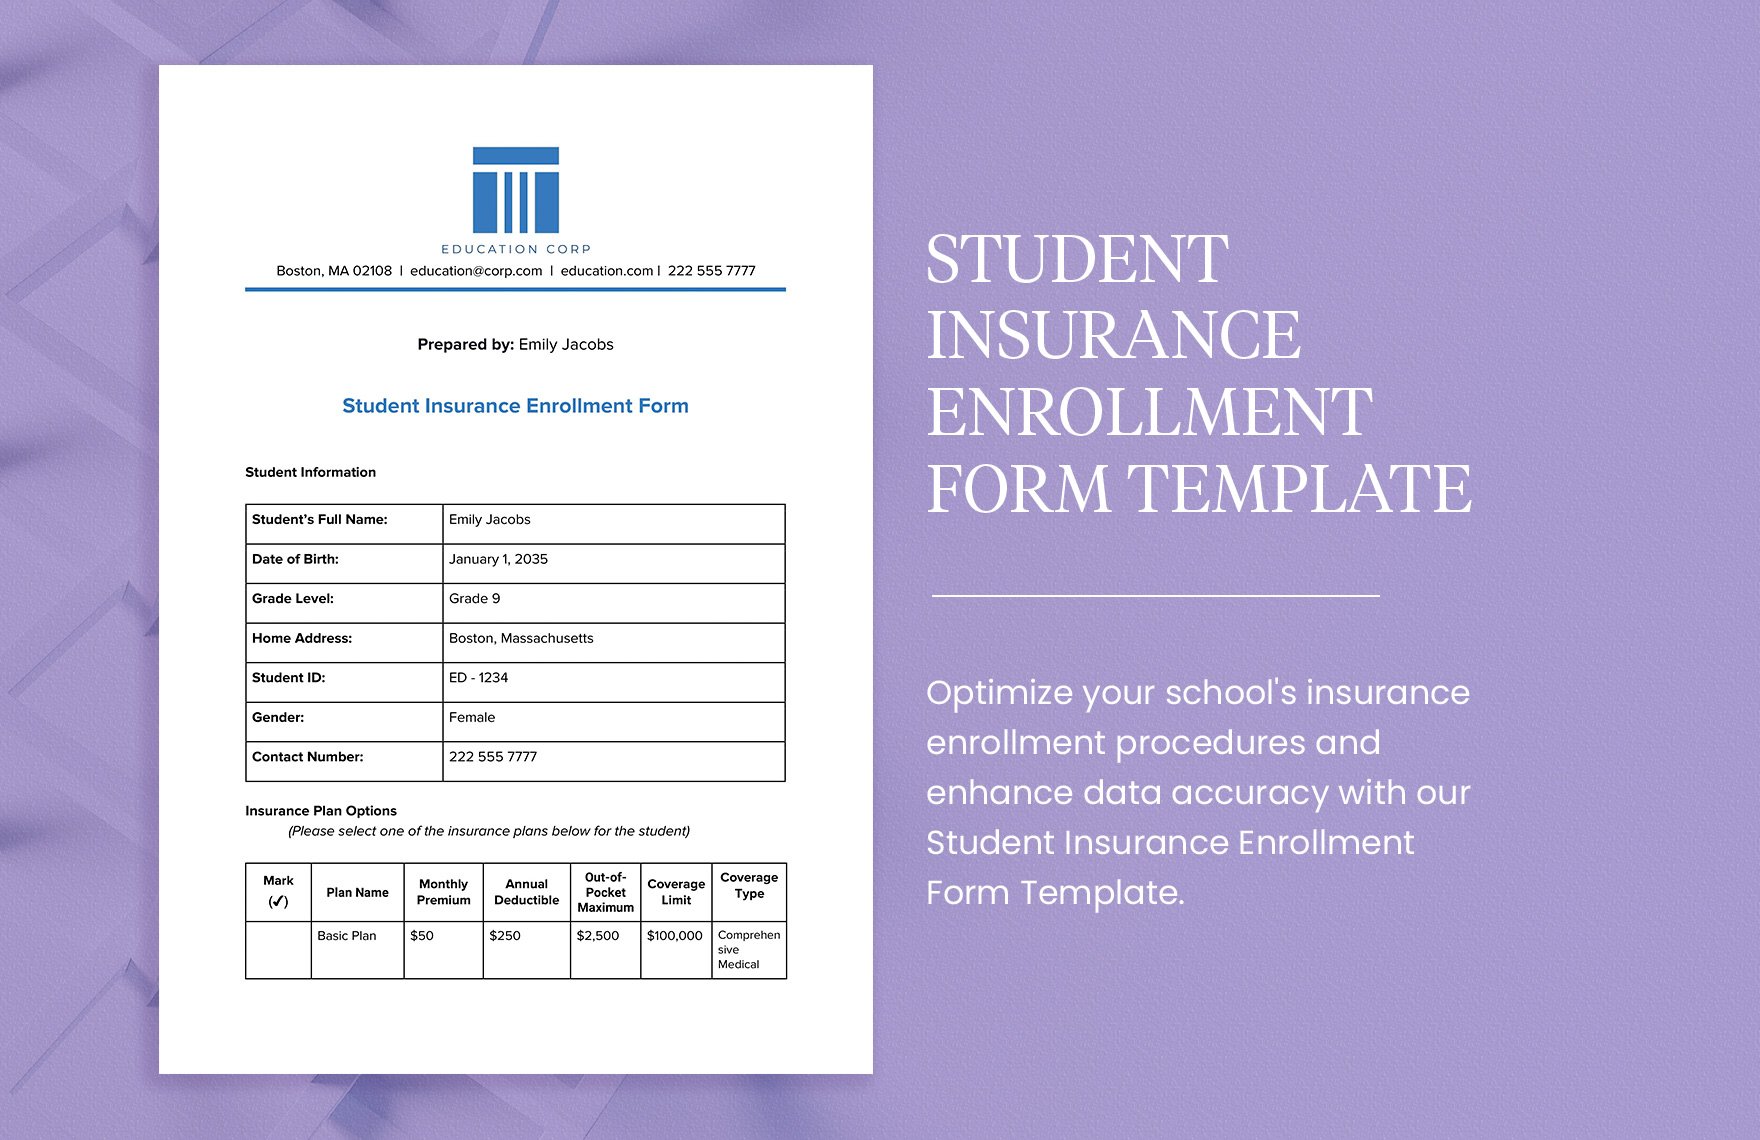 Student Insurance Enrollment Form Template